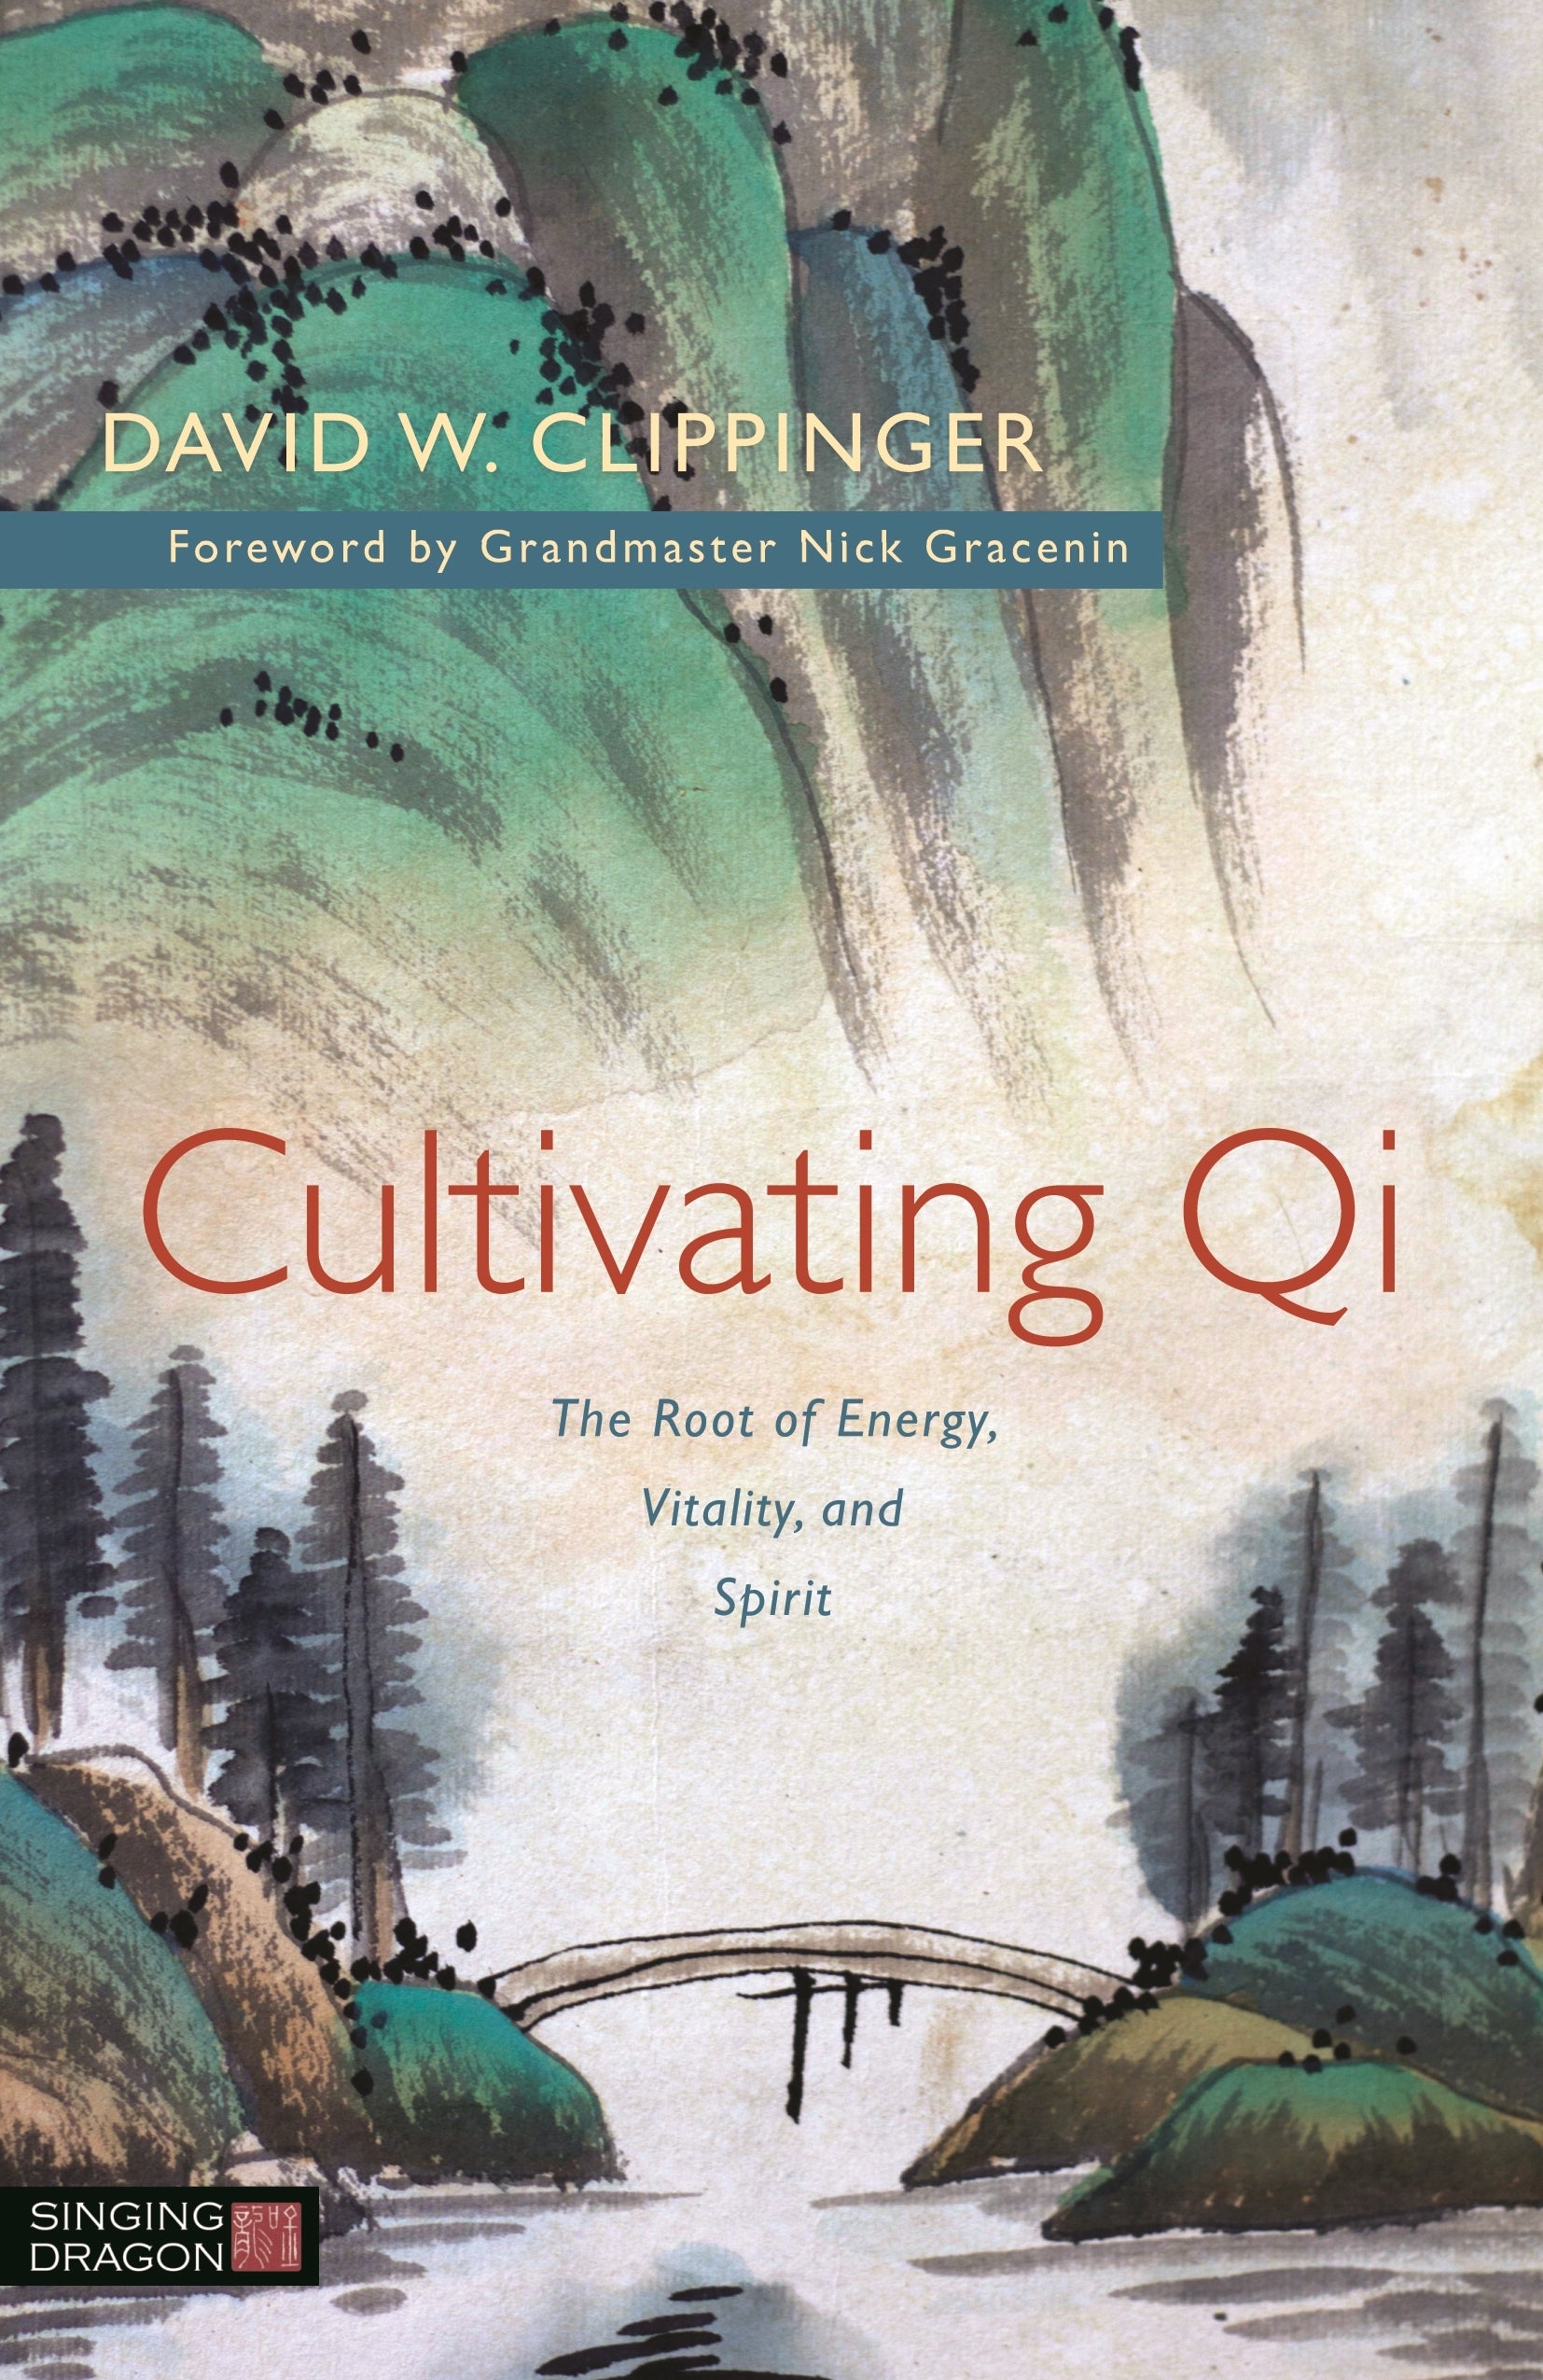 Cultivating Qi by Grandmaster Nick Gracenin, David W. Clippinger